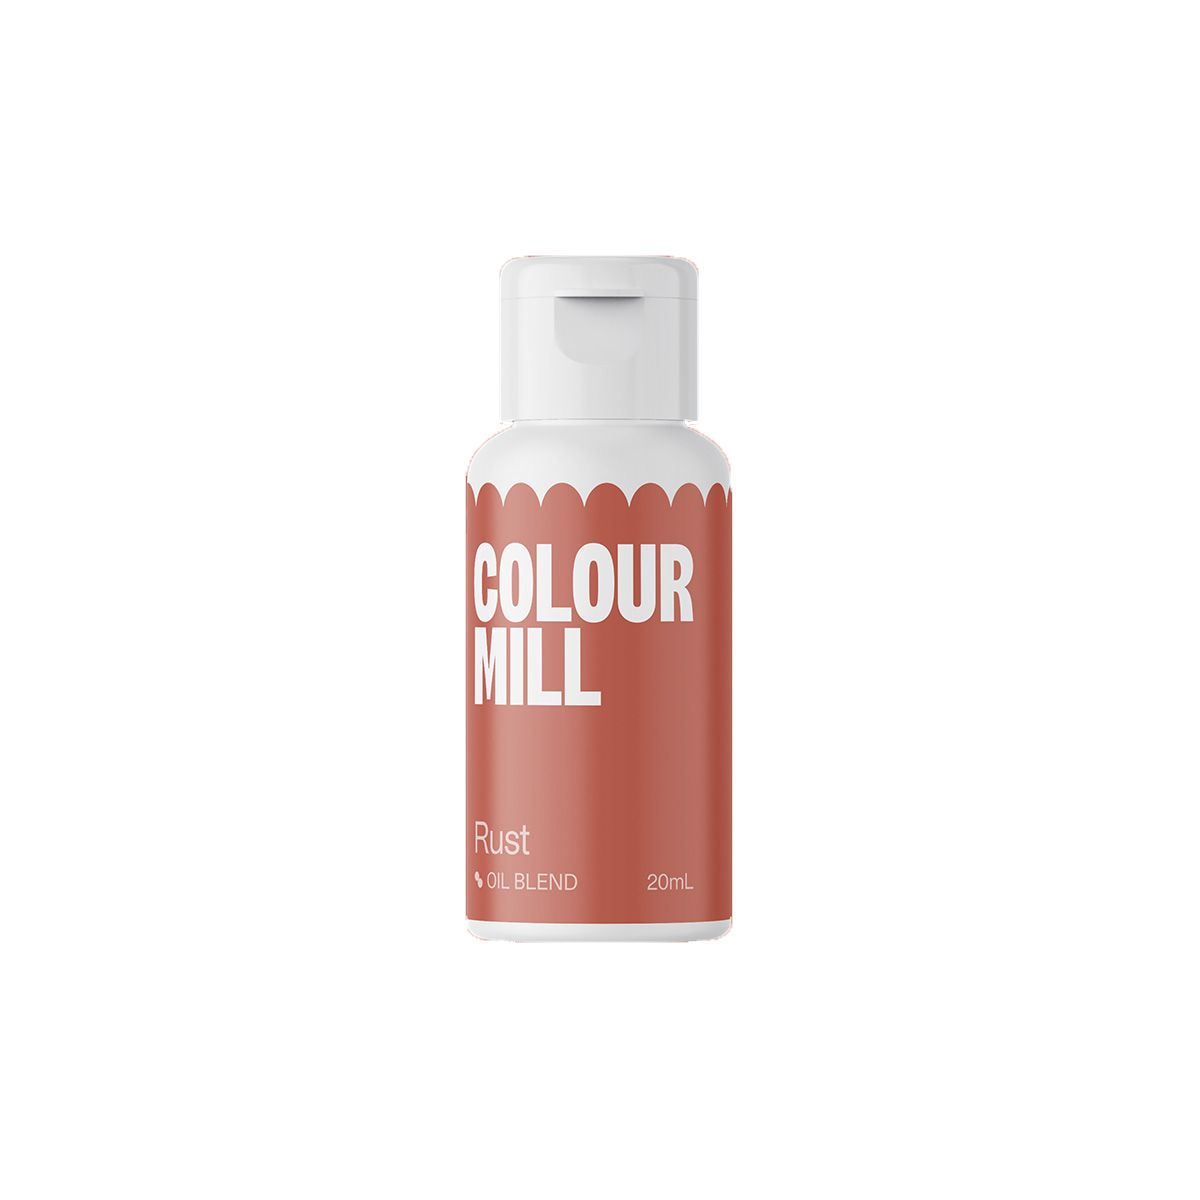 Colour mill ätbar färg i nyansen Rust